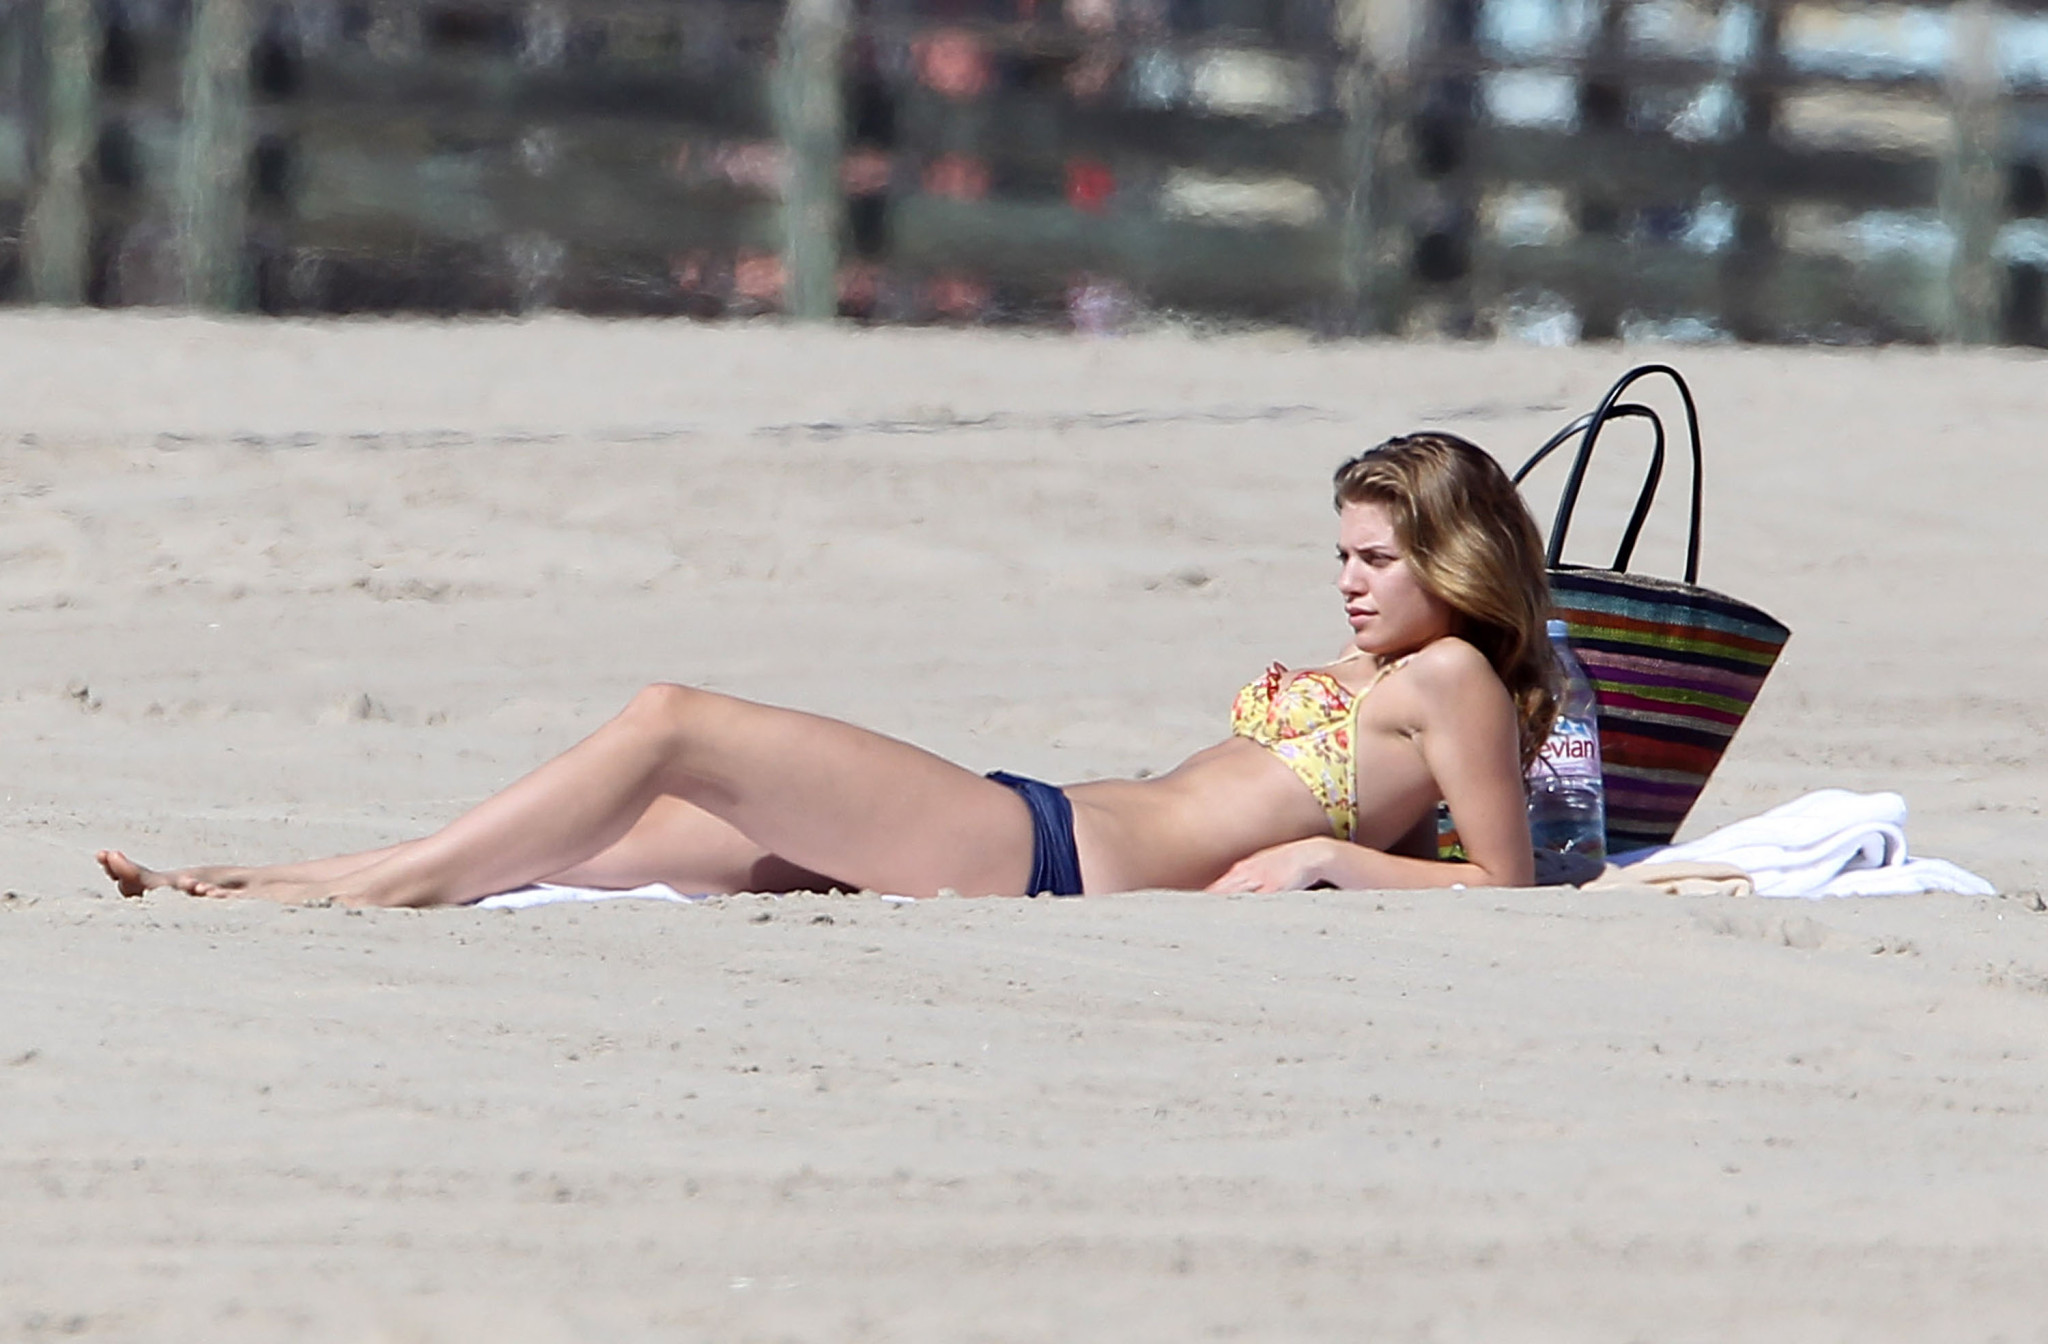 AnnaLynne McCord shows off her ass wearing old fashion bikini on a beach in Cali #75272704